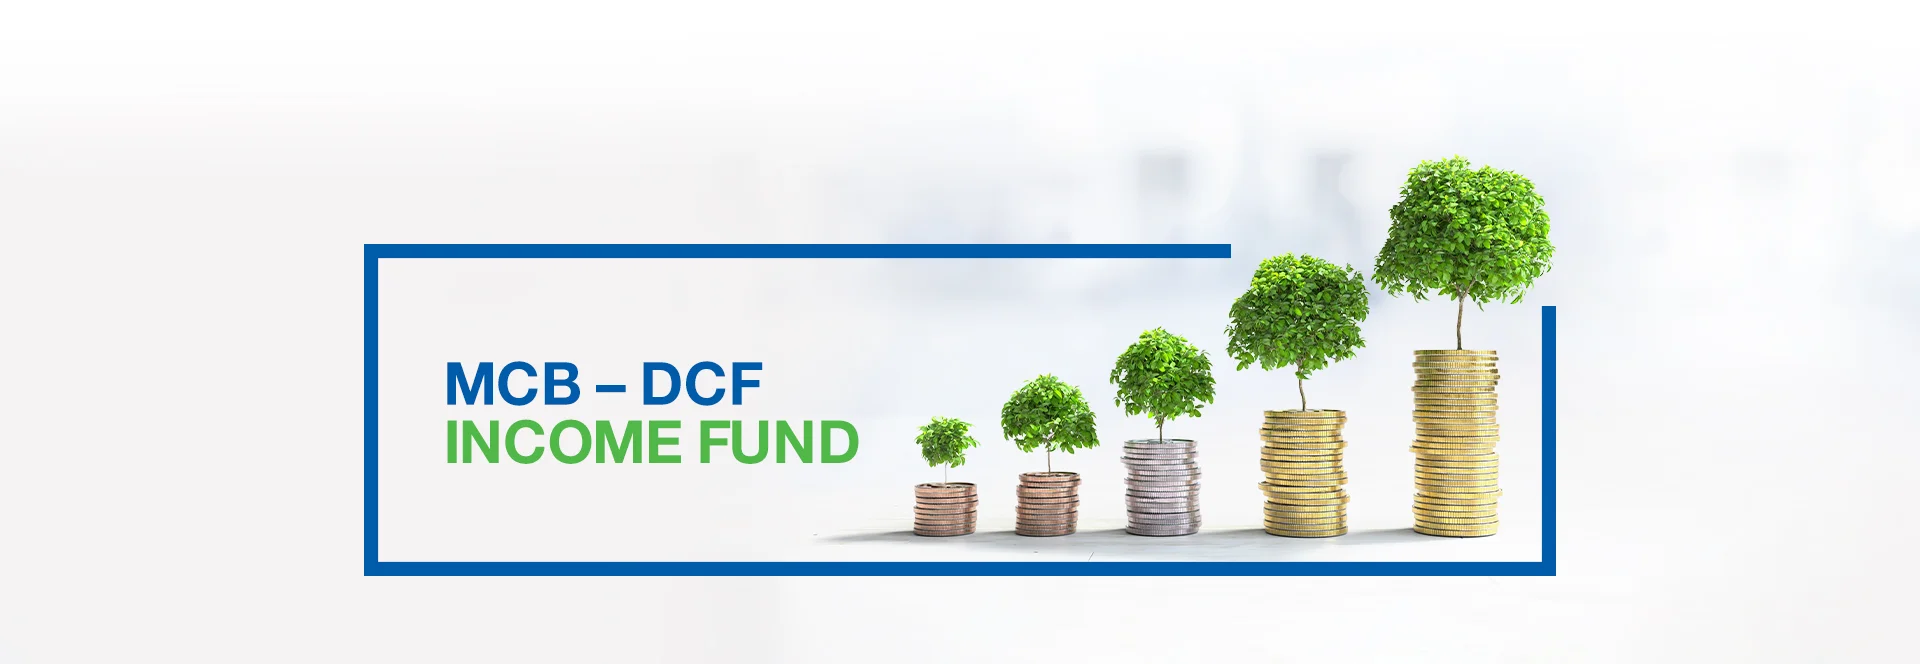 MCB-DCF Income Fund